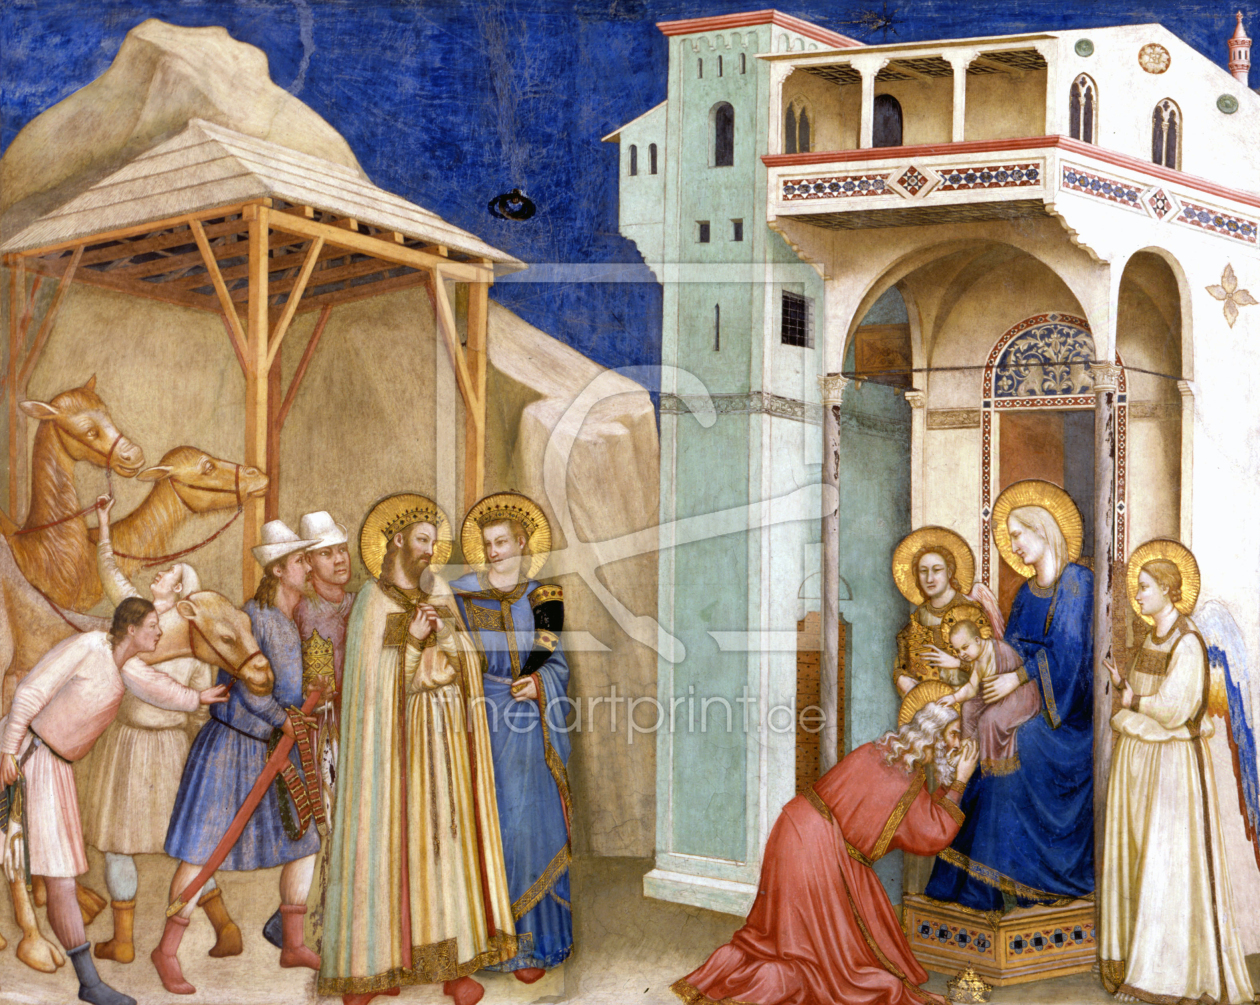 Bild-Nr.: 30001888 Giotto / Adoration of Kings / Assisi erstellt von Giotto di Bondone